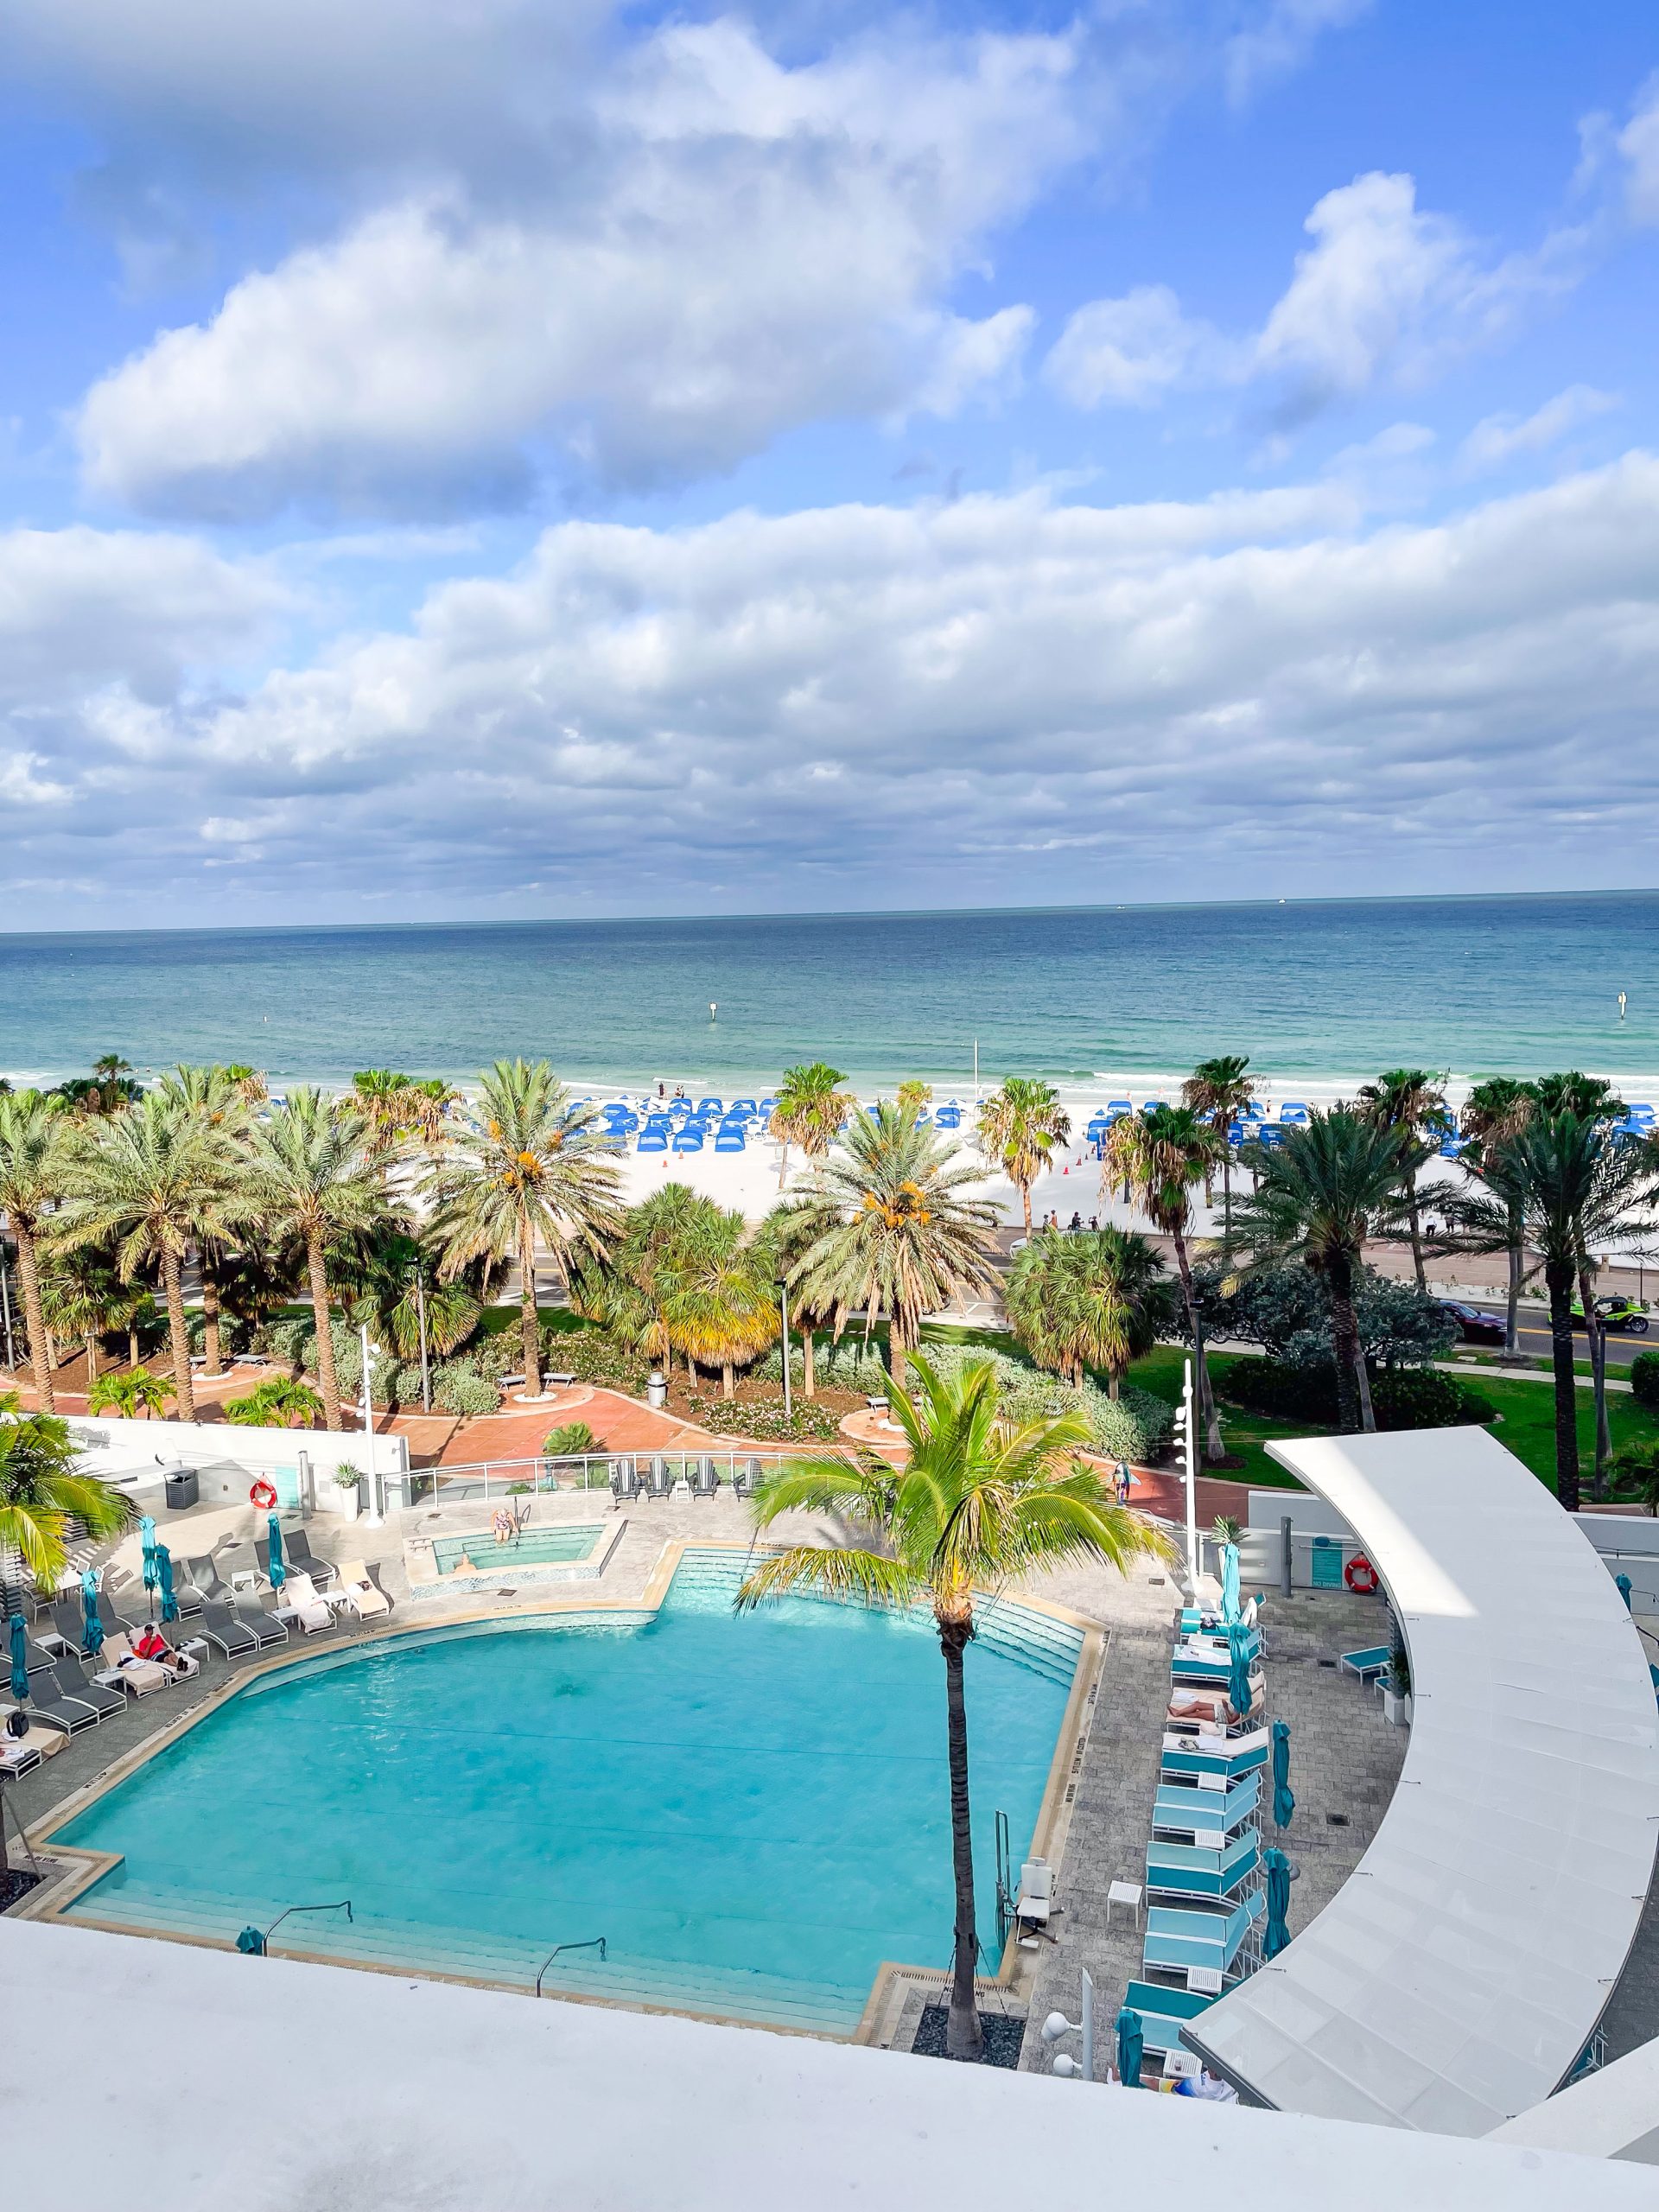 Wyndham Grand Clearwater Beach View Best Hotel on Clearwater Beach